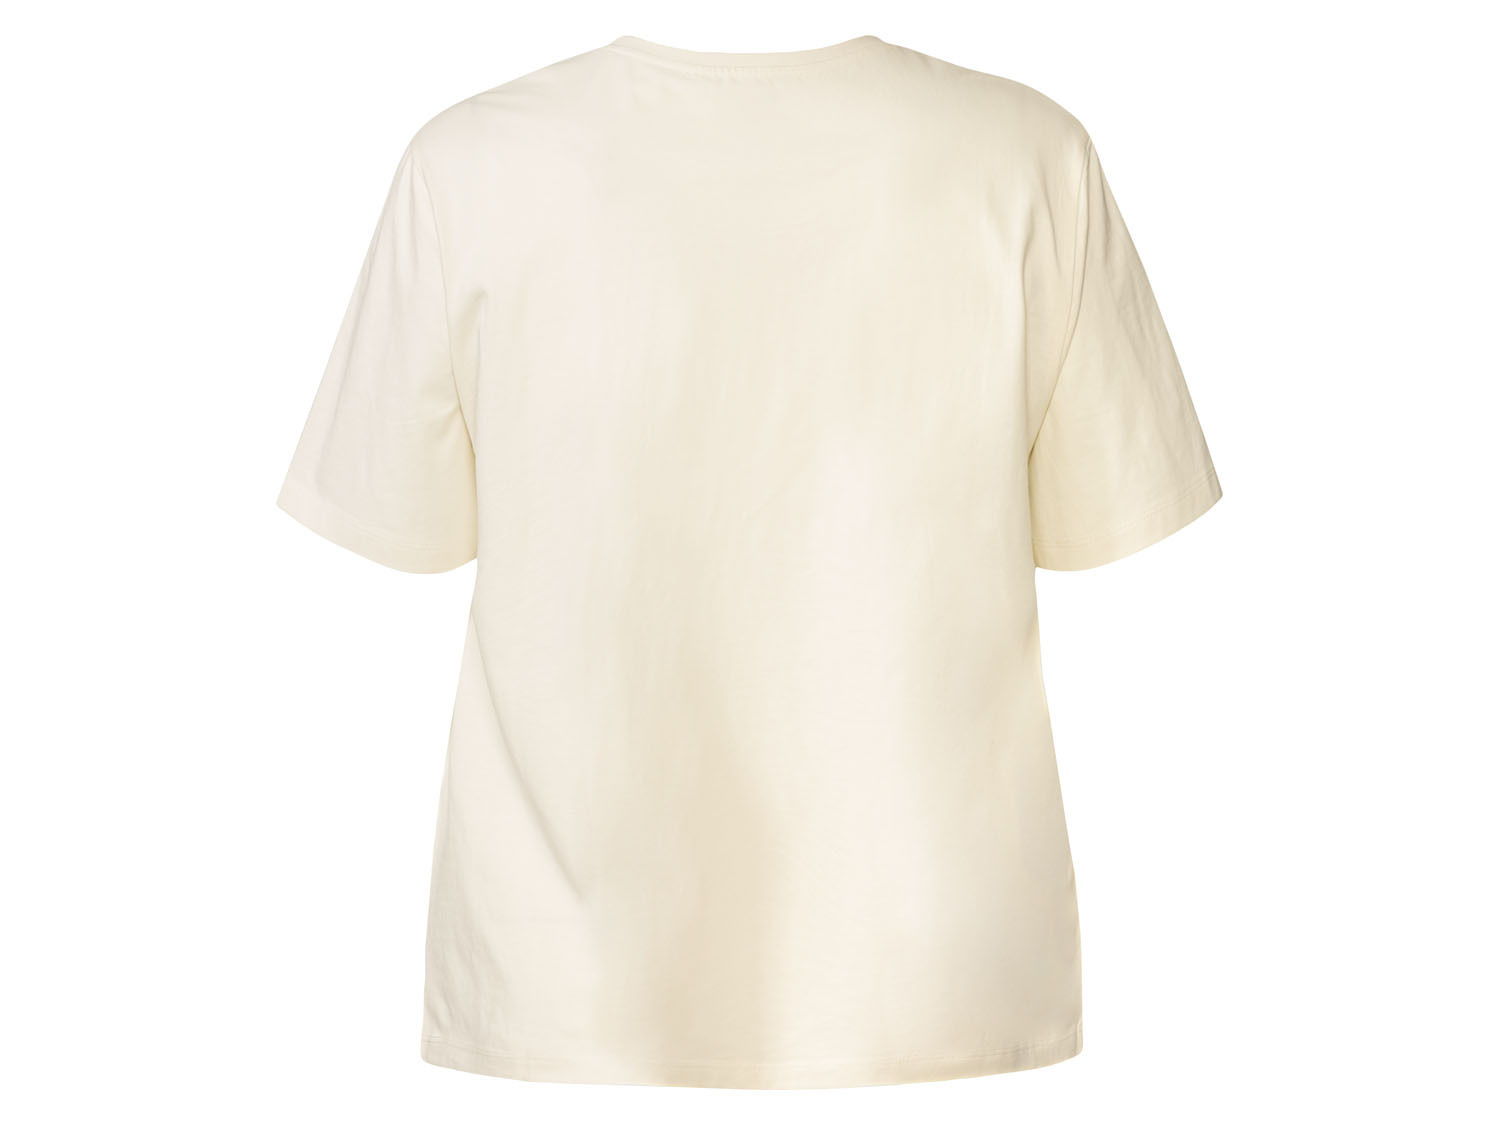 Damen Tshirt LIDL Limited Edition M - .de